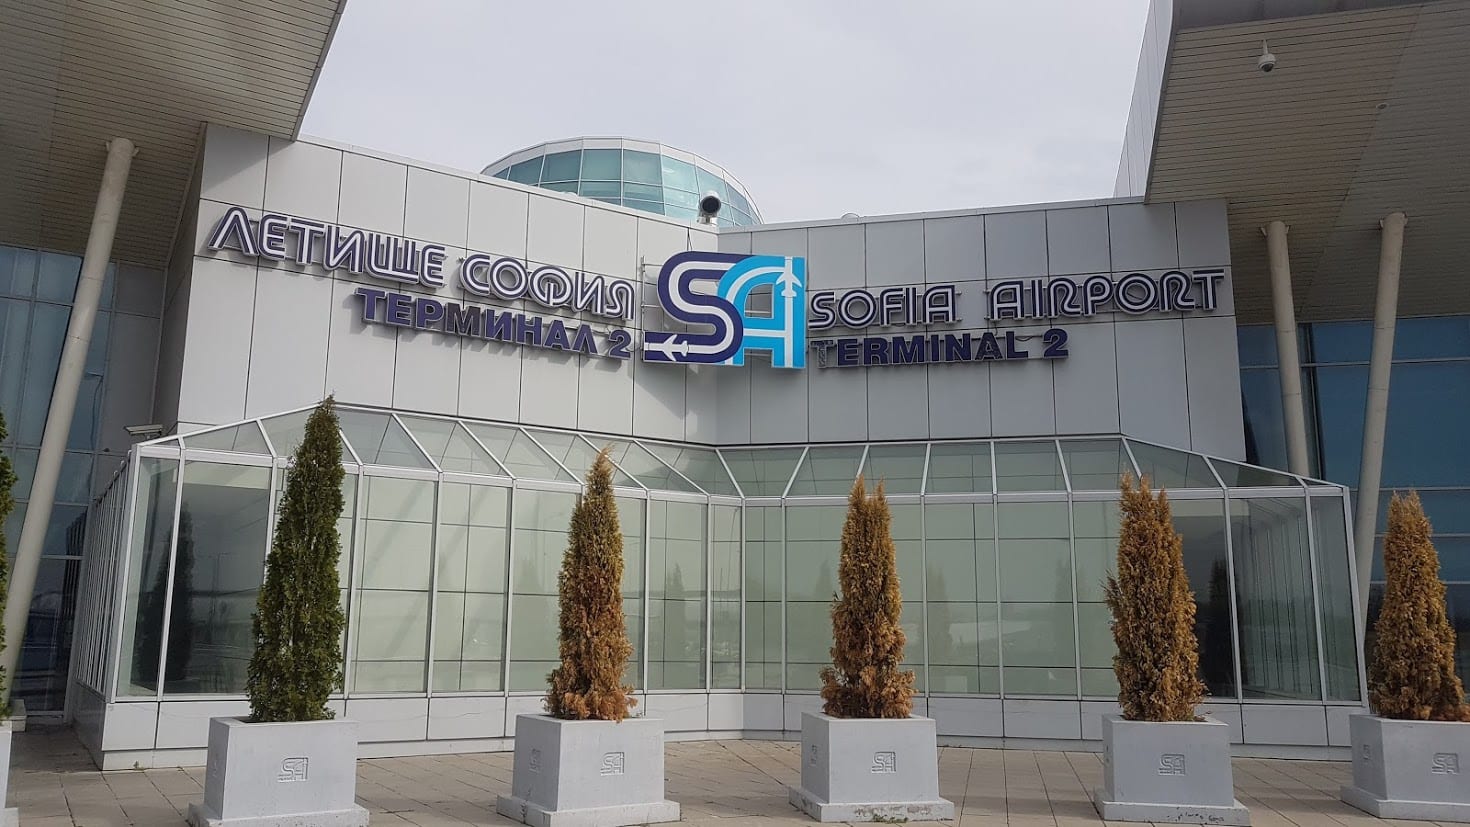 Sofia Airport Transfers explained